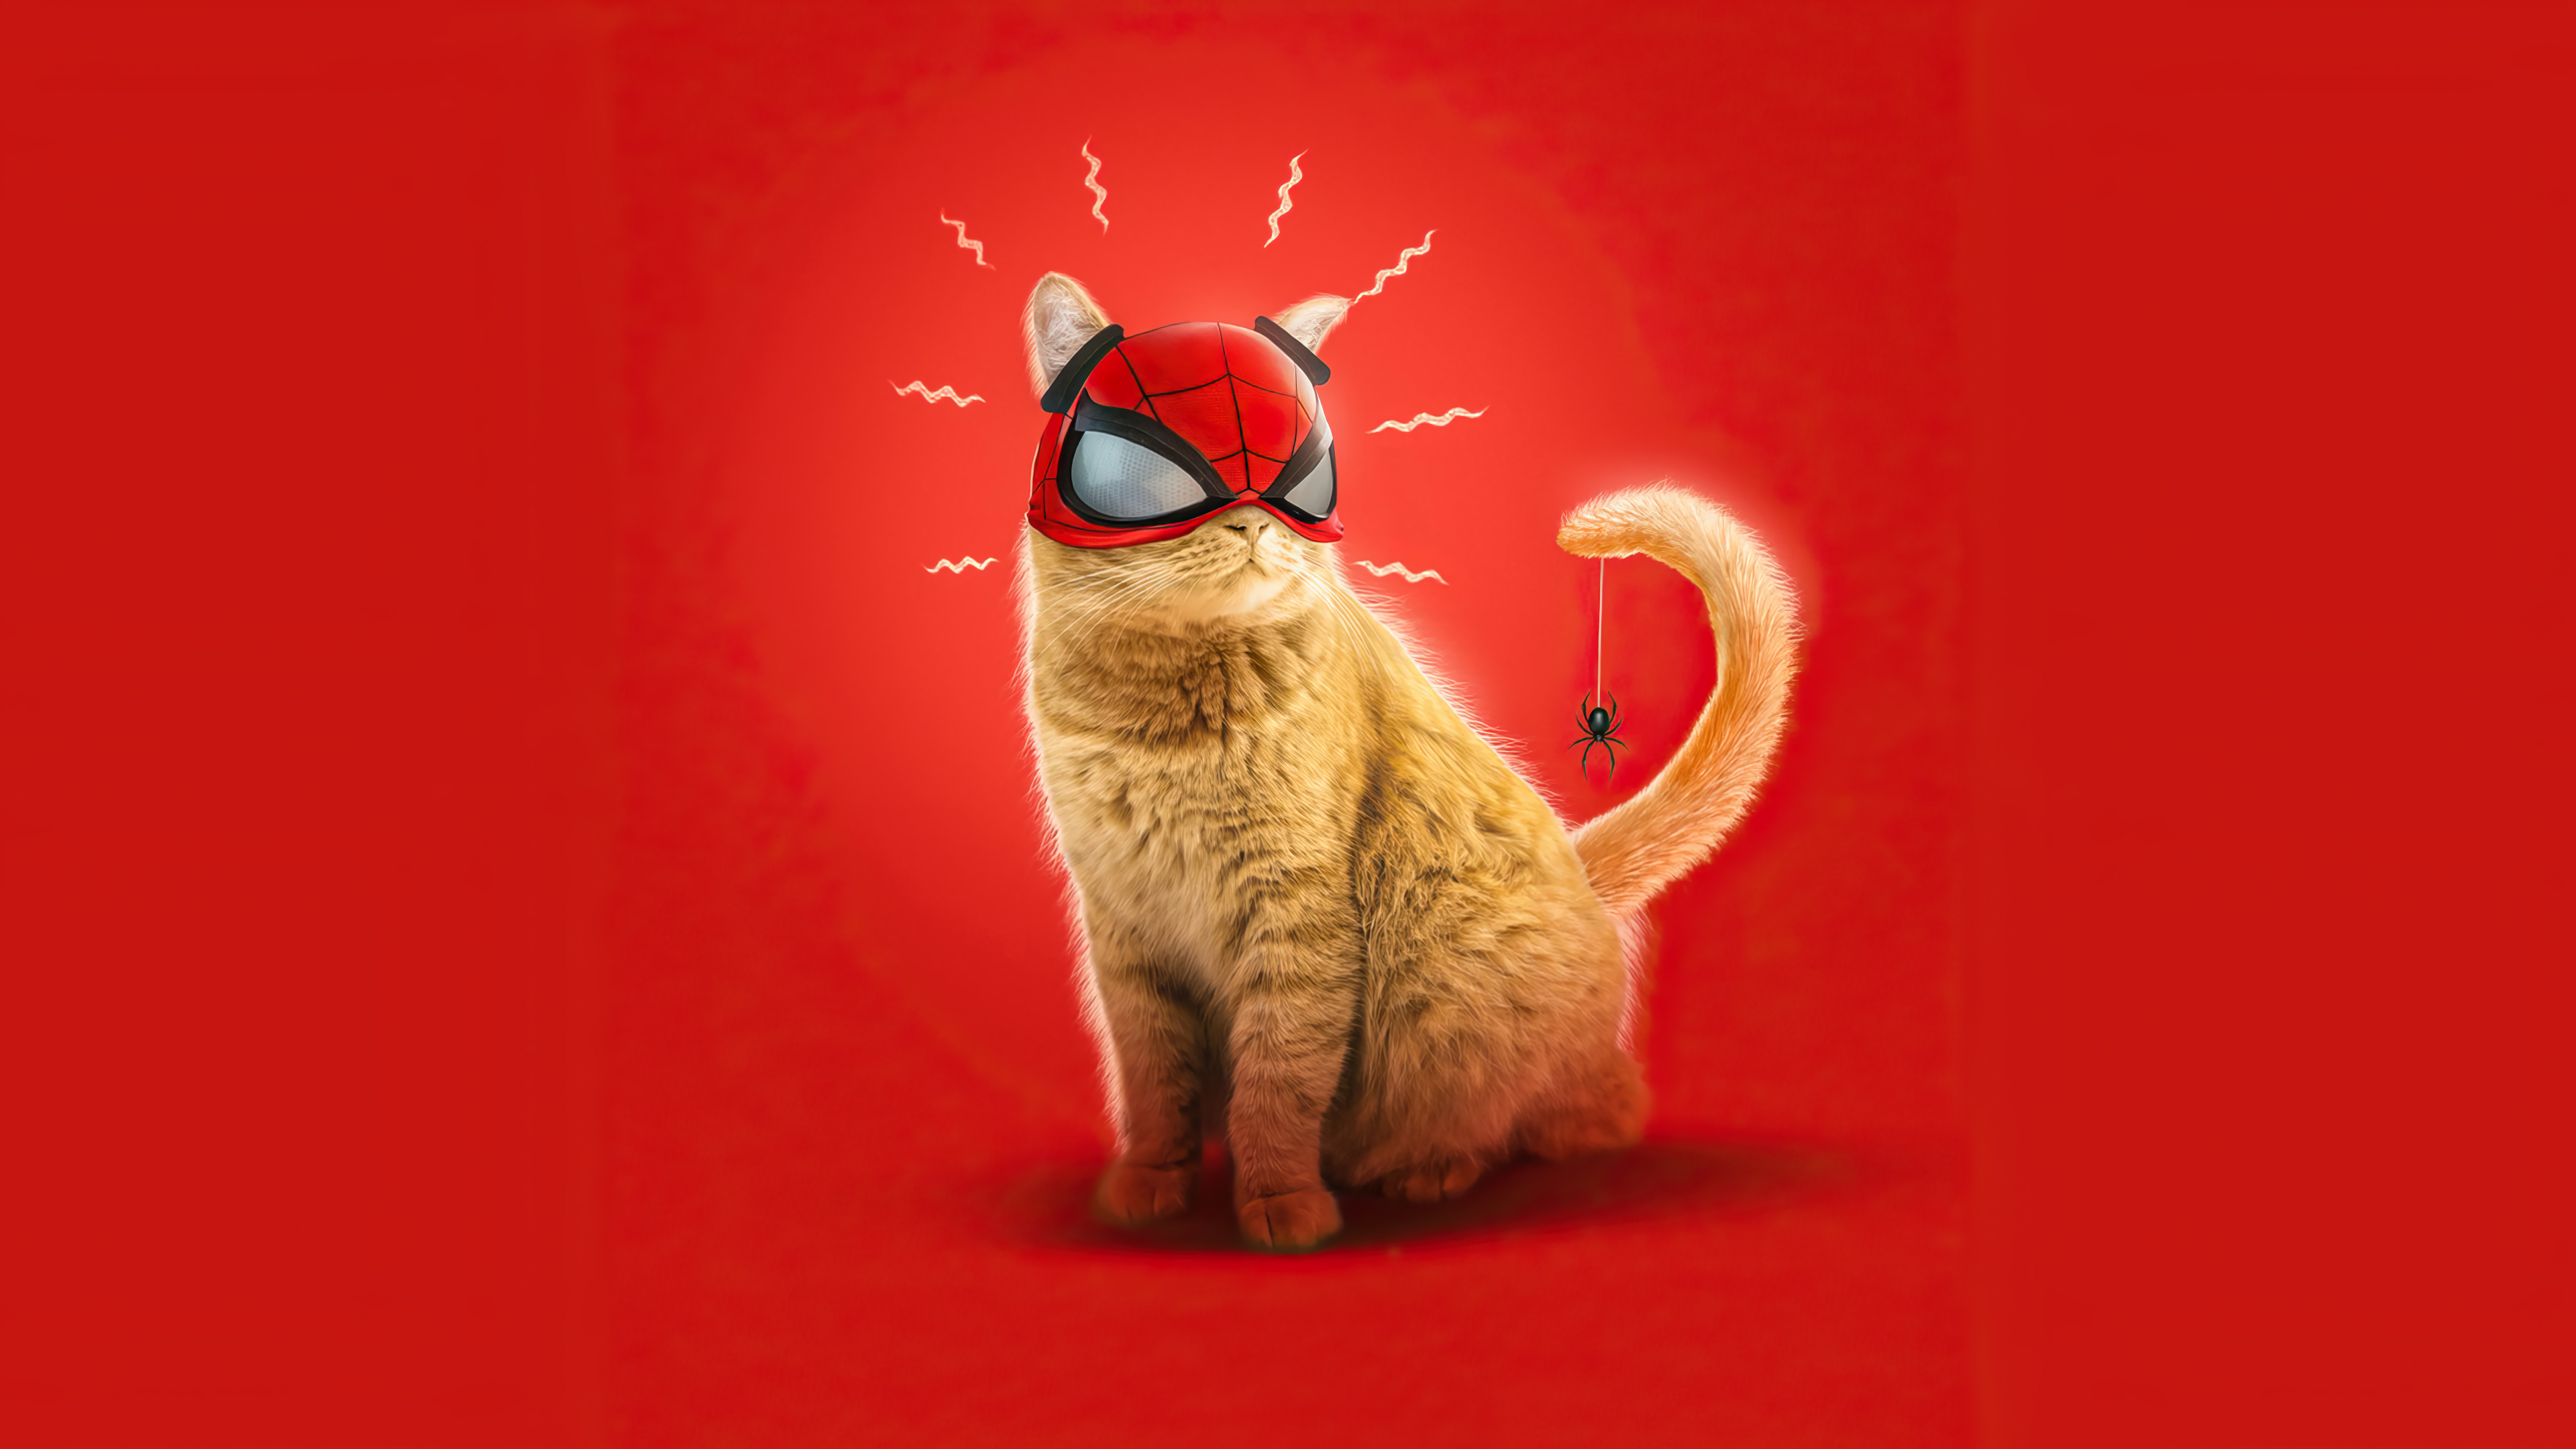 spider man: miles morales, spider cat, marvel's spider man: miles morales, video game, cat, mask, red, spider